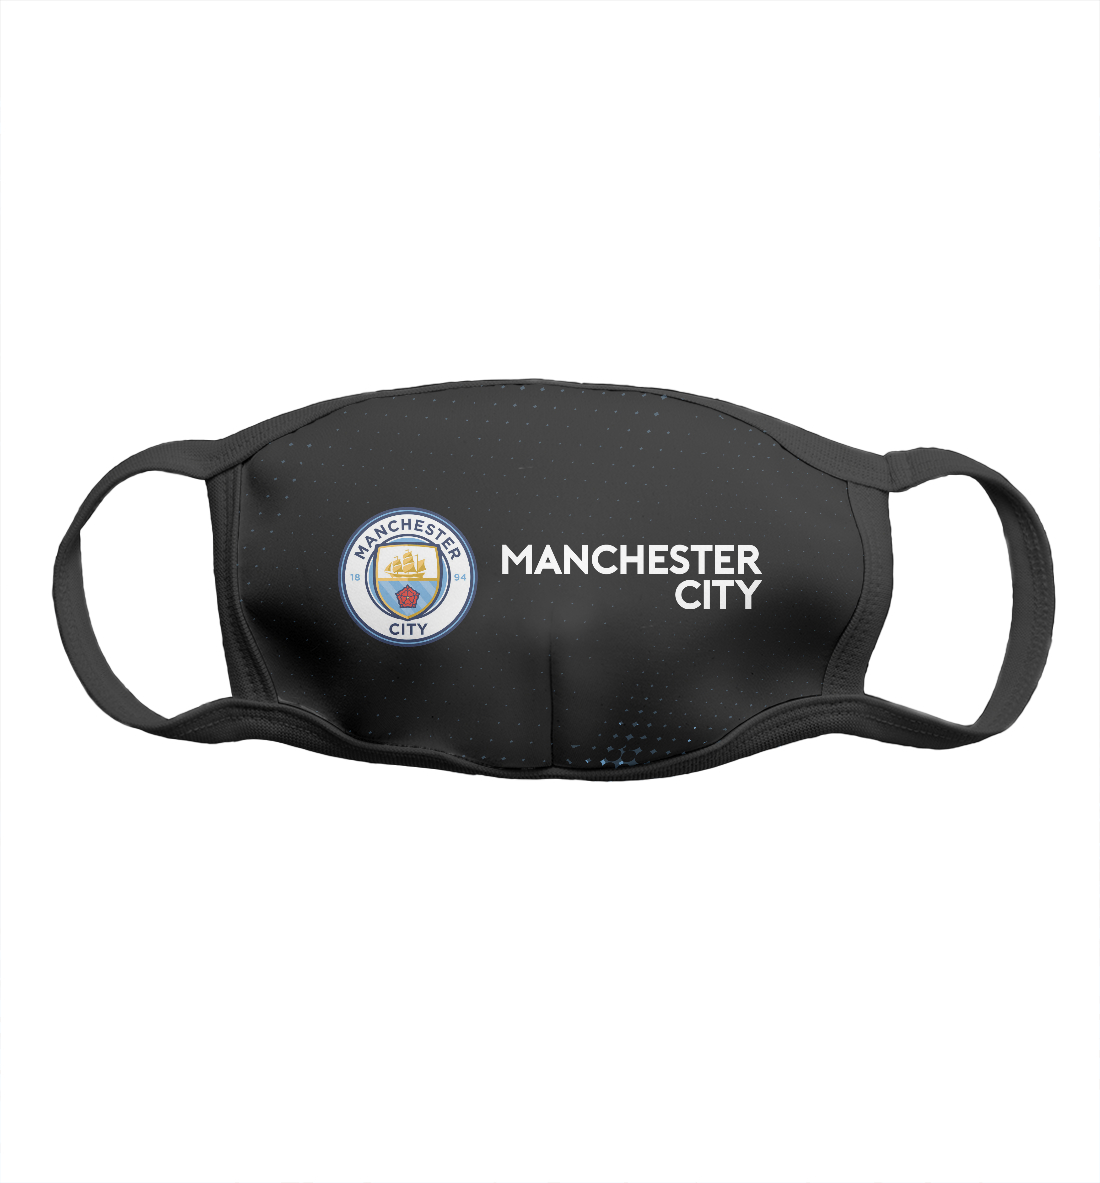 Женская Маска Manchester City, артикул MNC-534545-msk-1mp